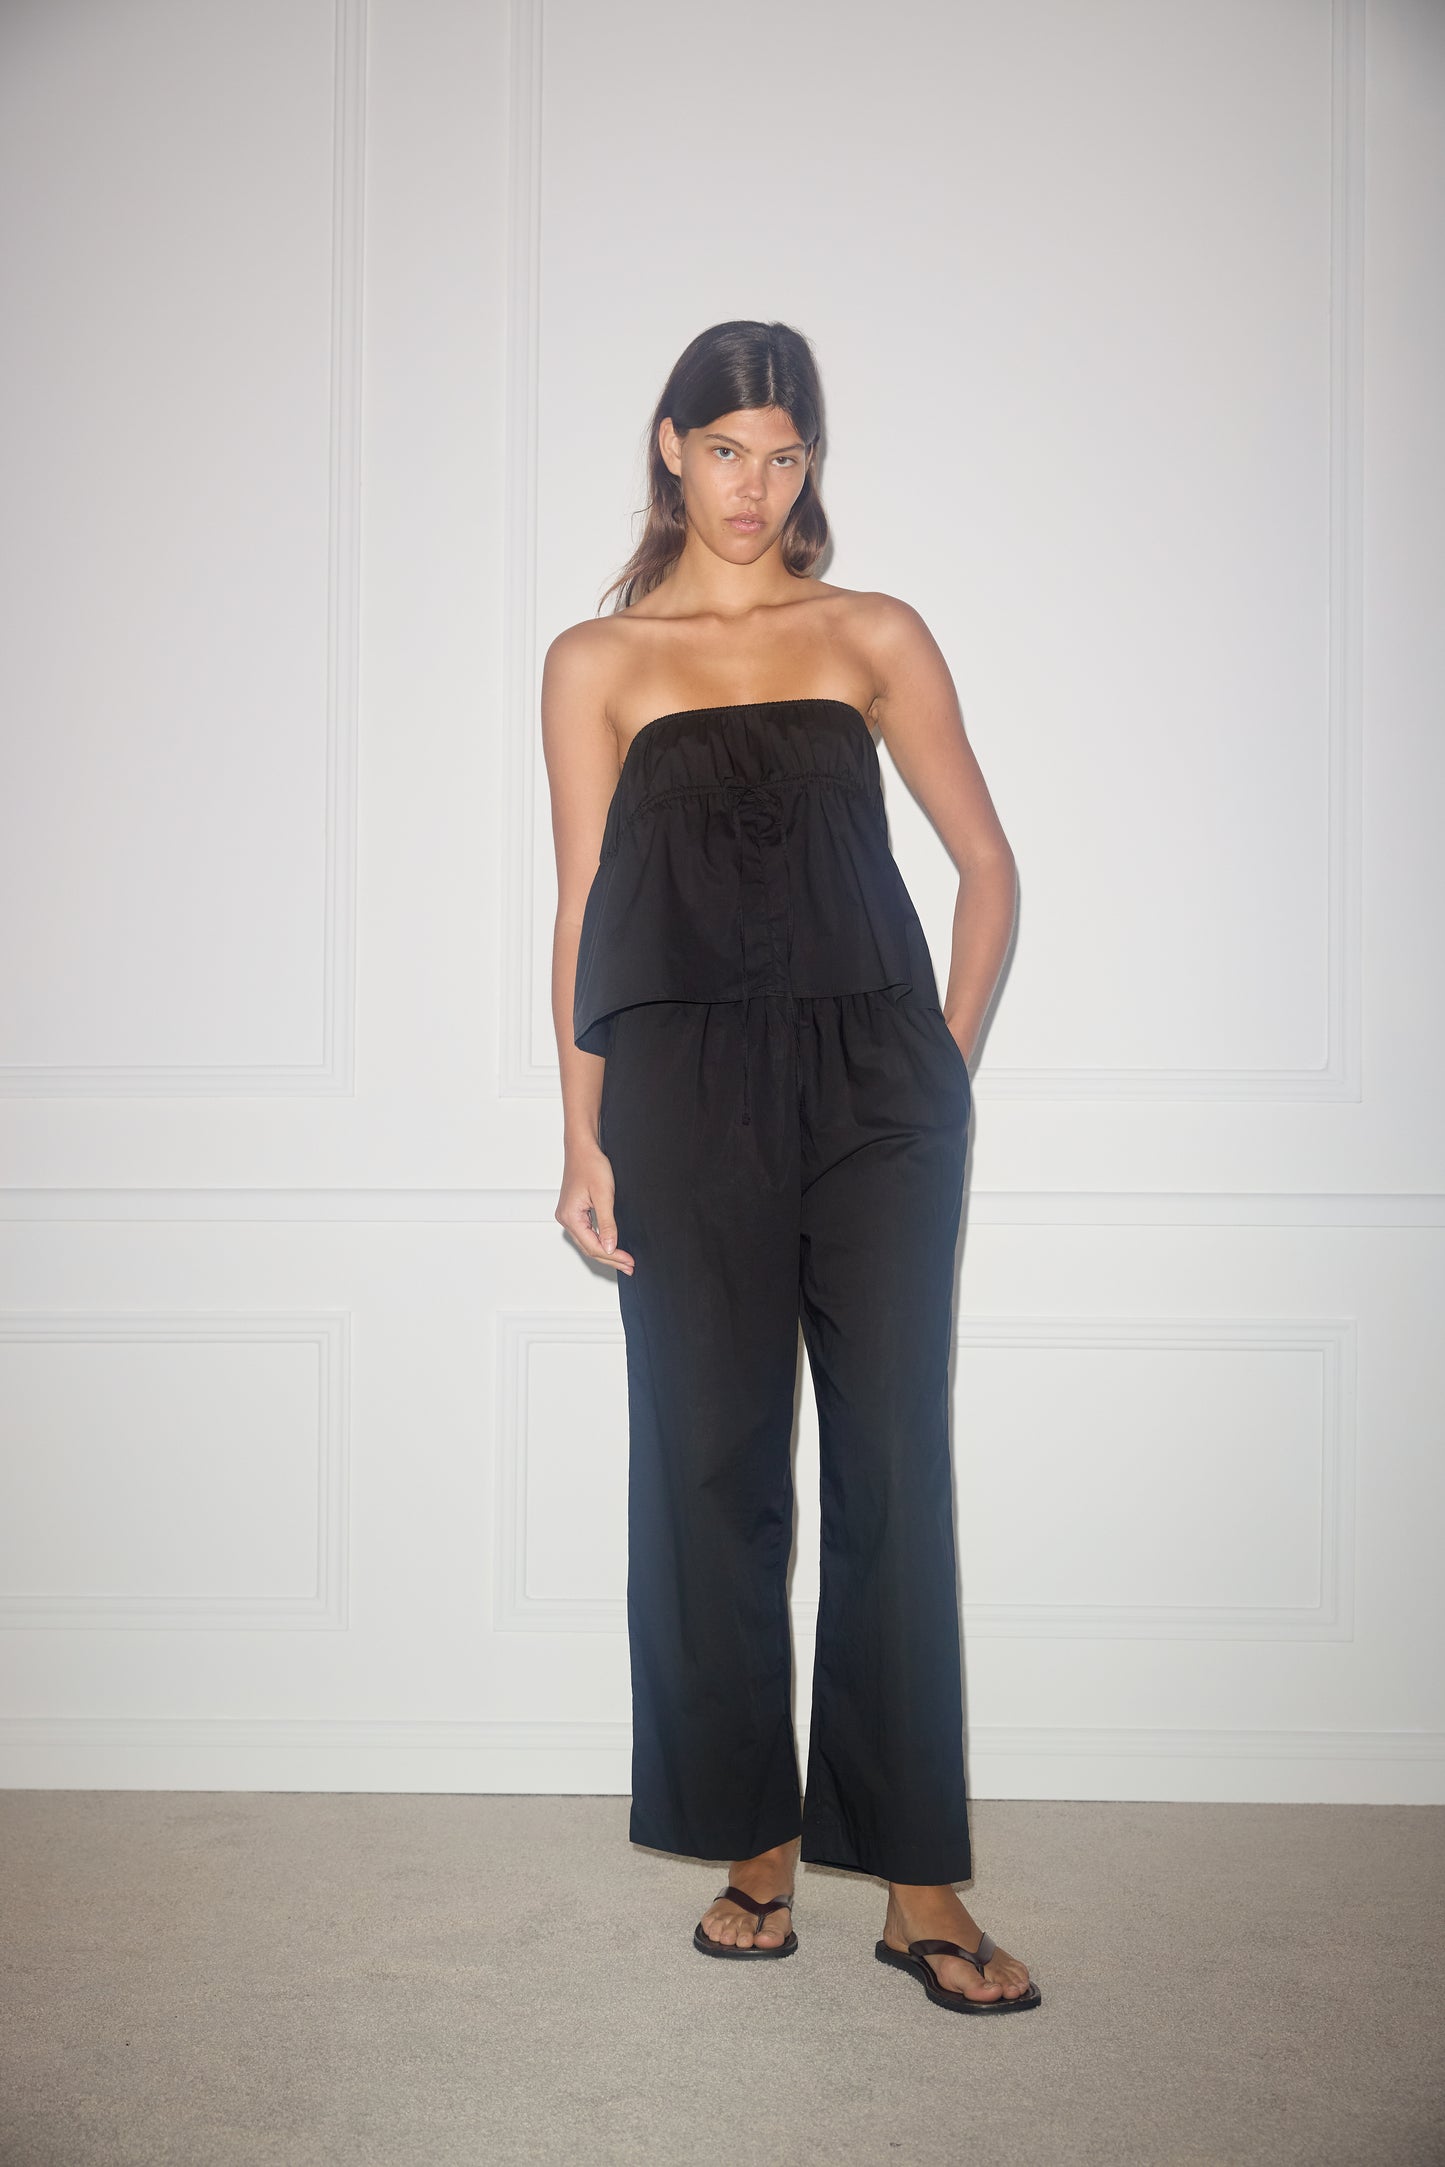 Female model wearing the strapless cotton top - black by Deiji Studios against plain background